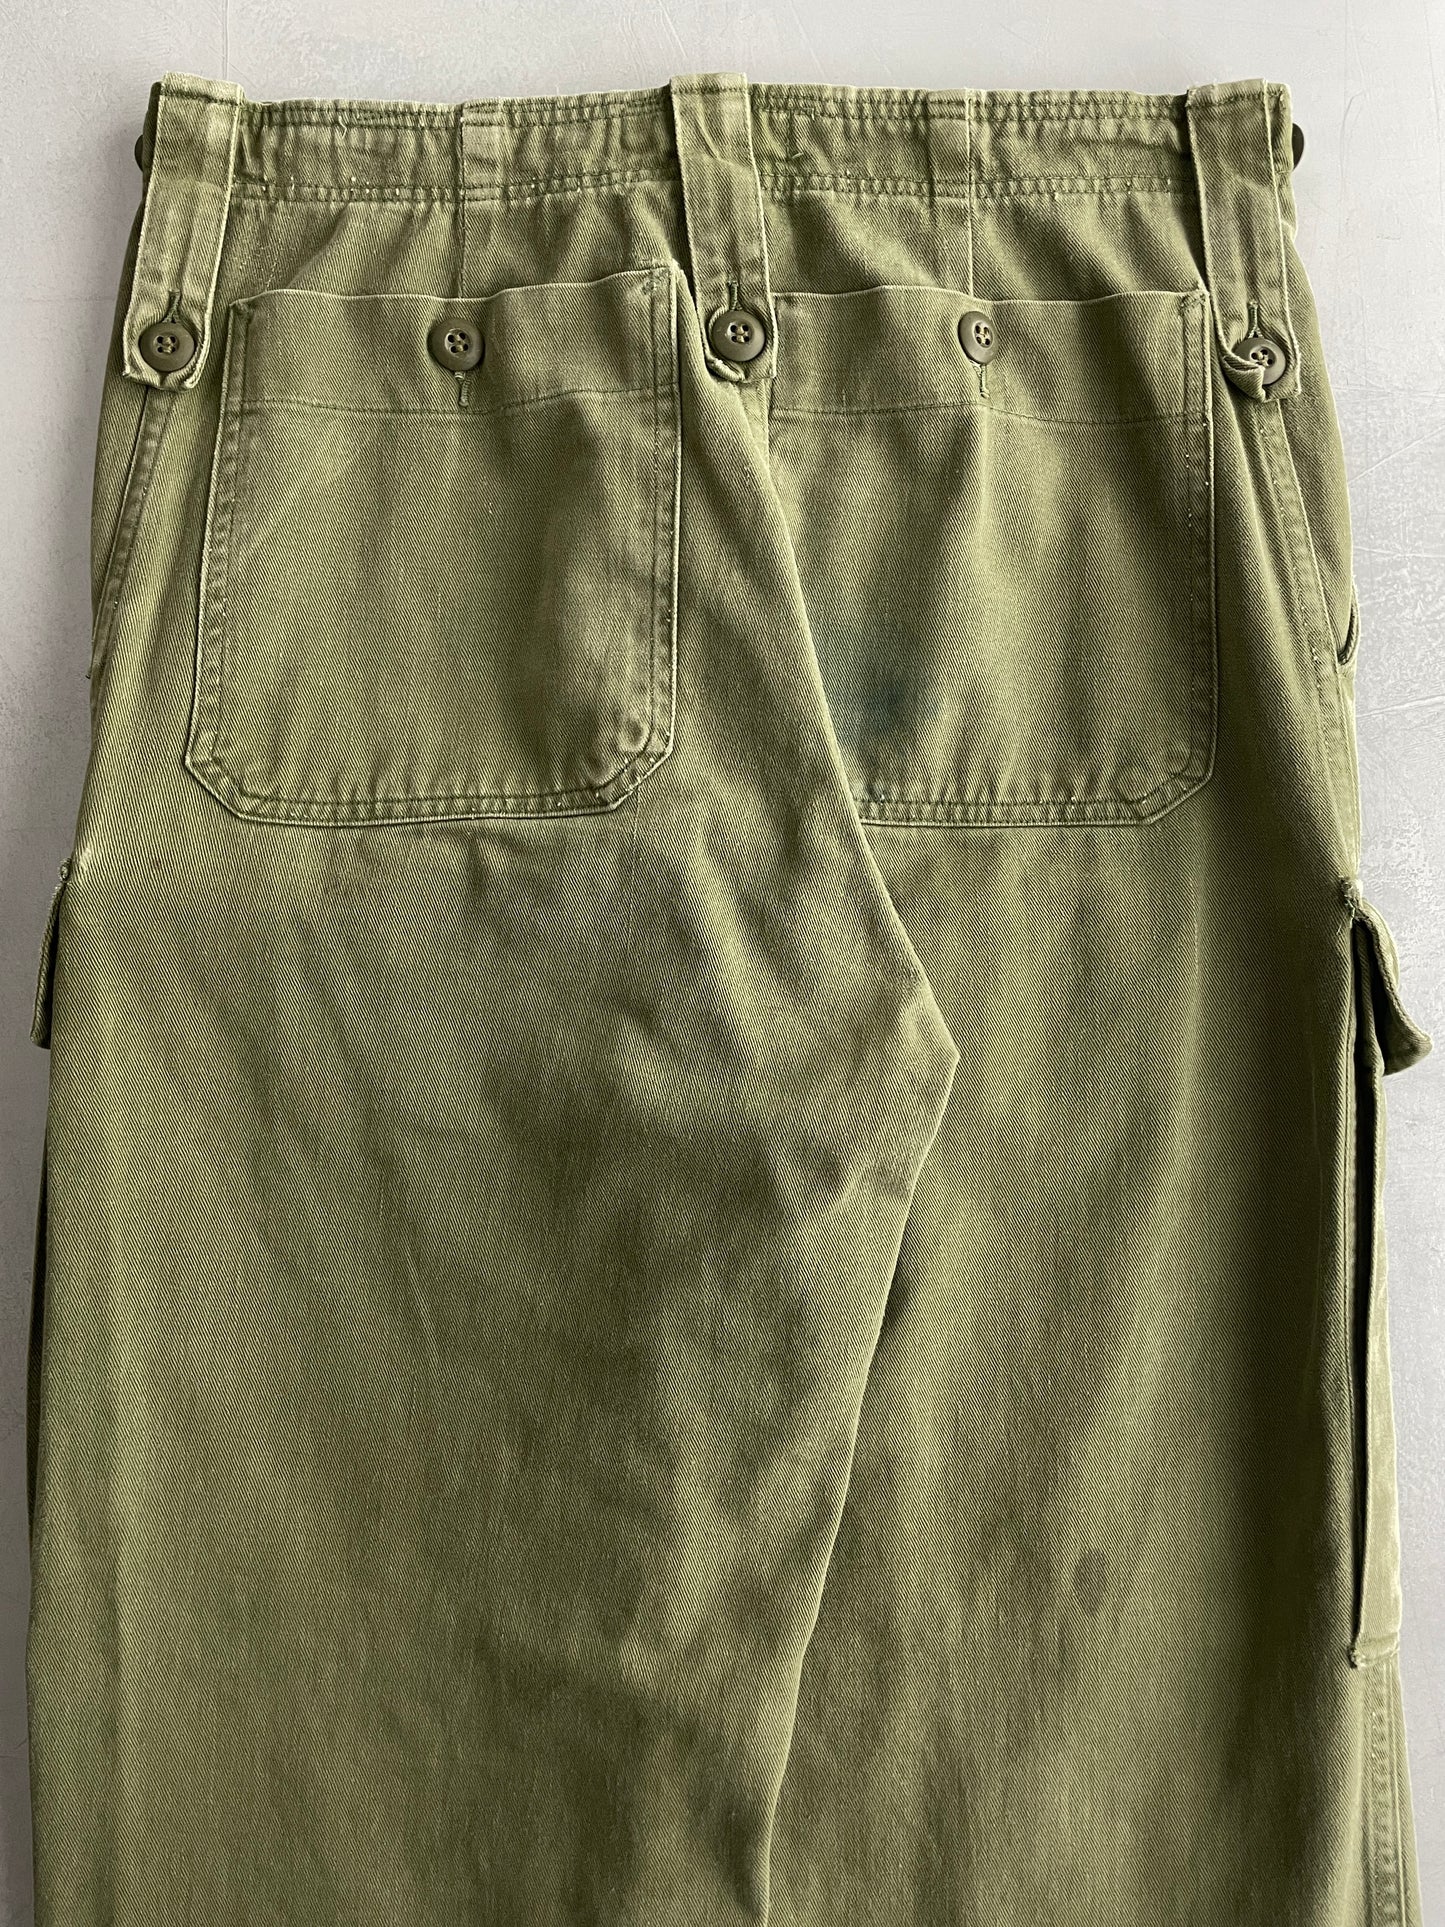 Aus Army Cargo Pants [36"]